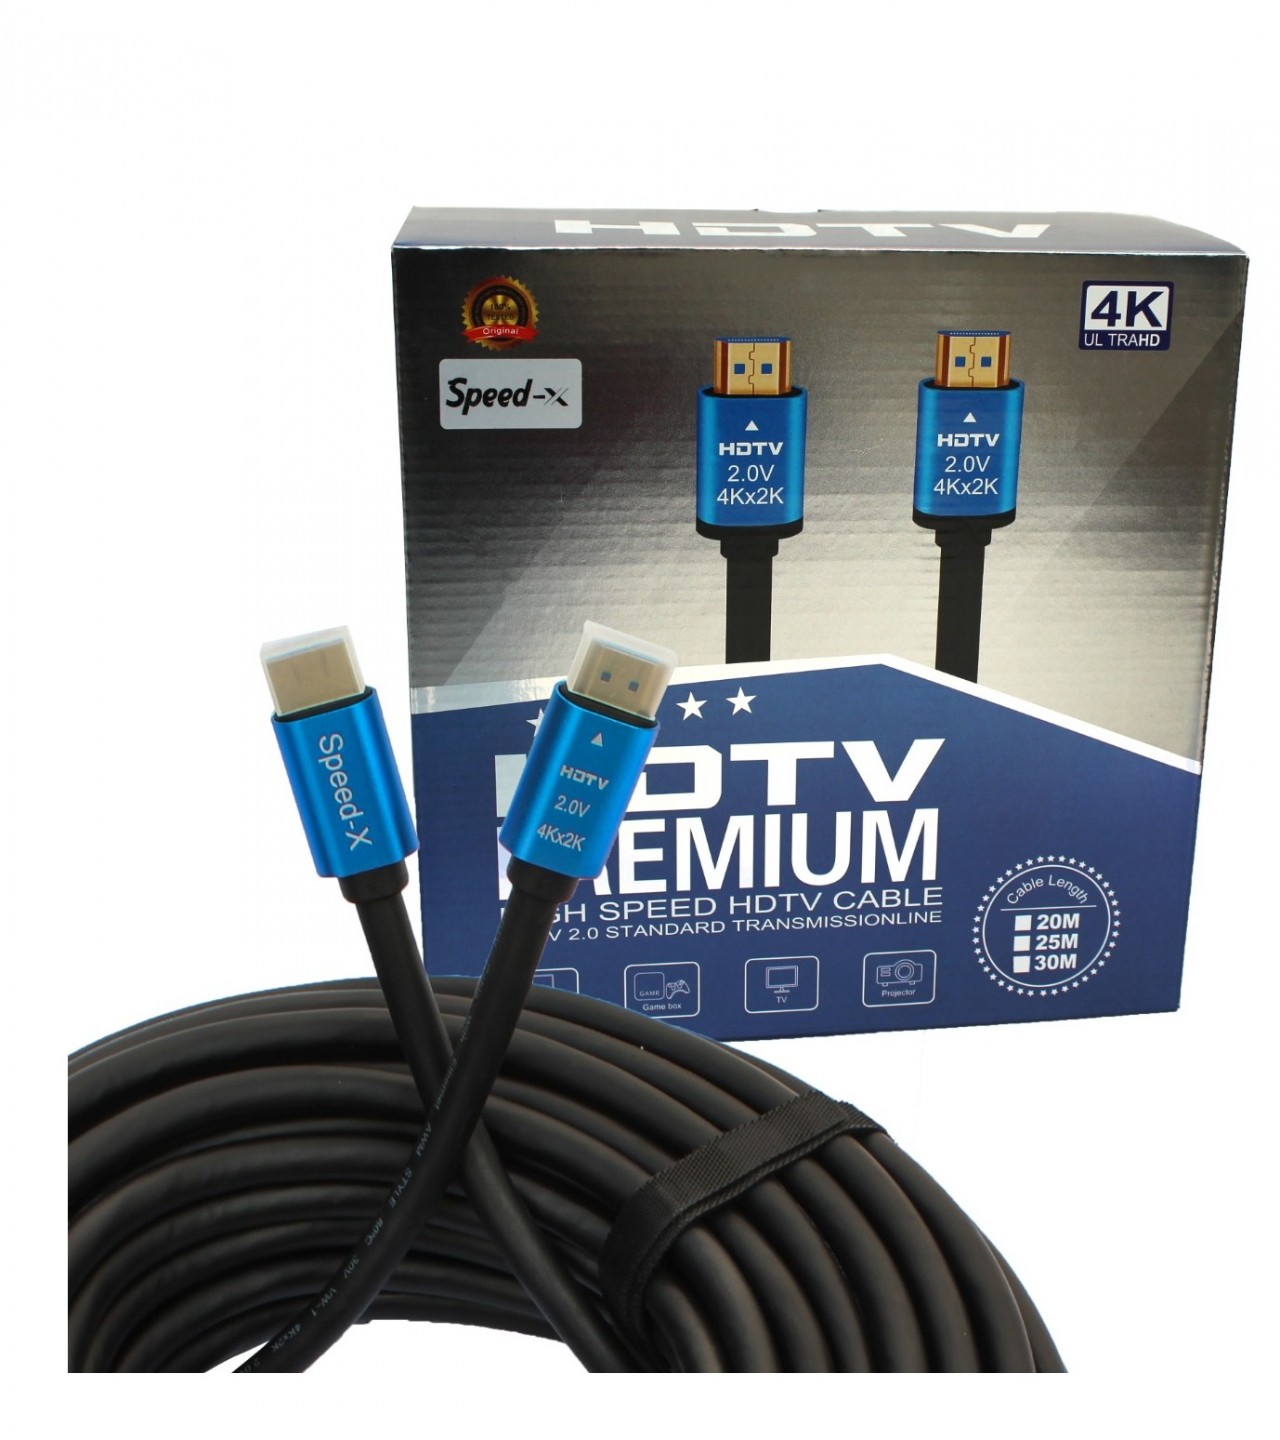 Speed-X 2.0V HDMI Premium Cable Ultra HD 4k 25m